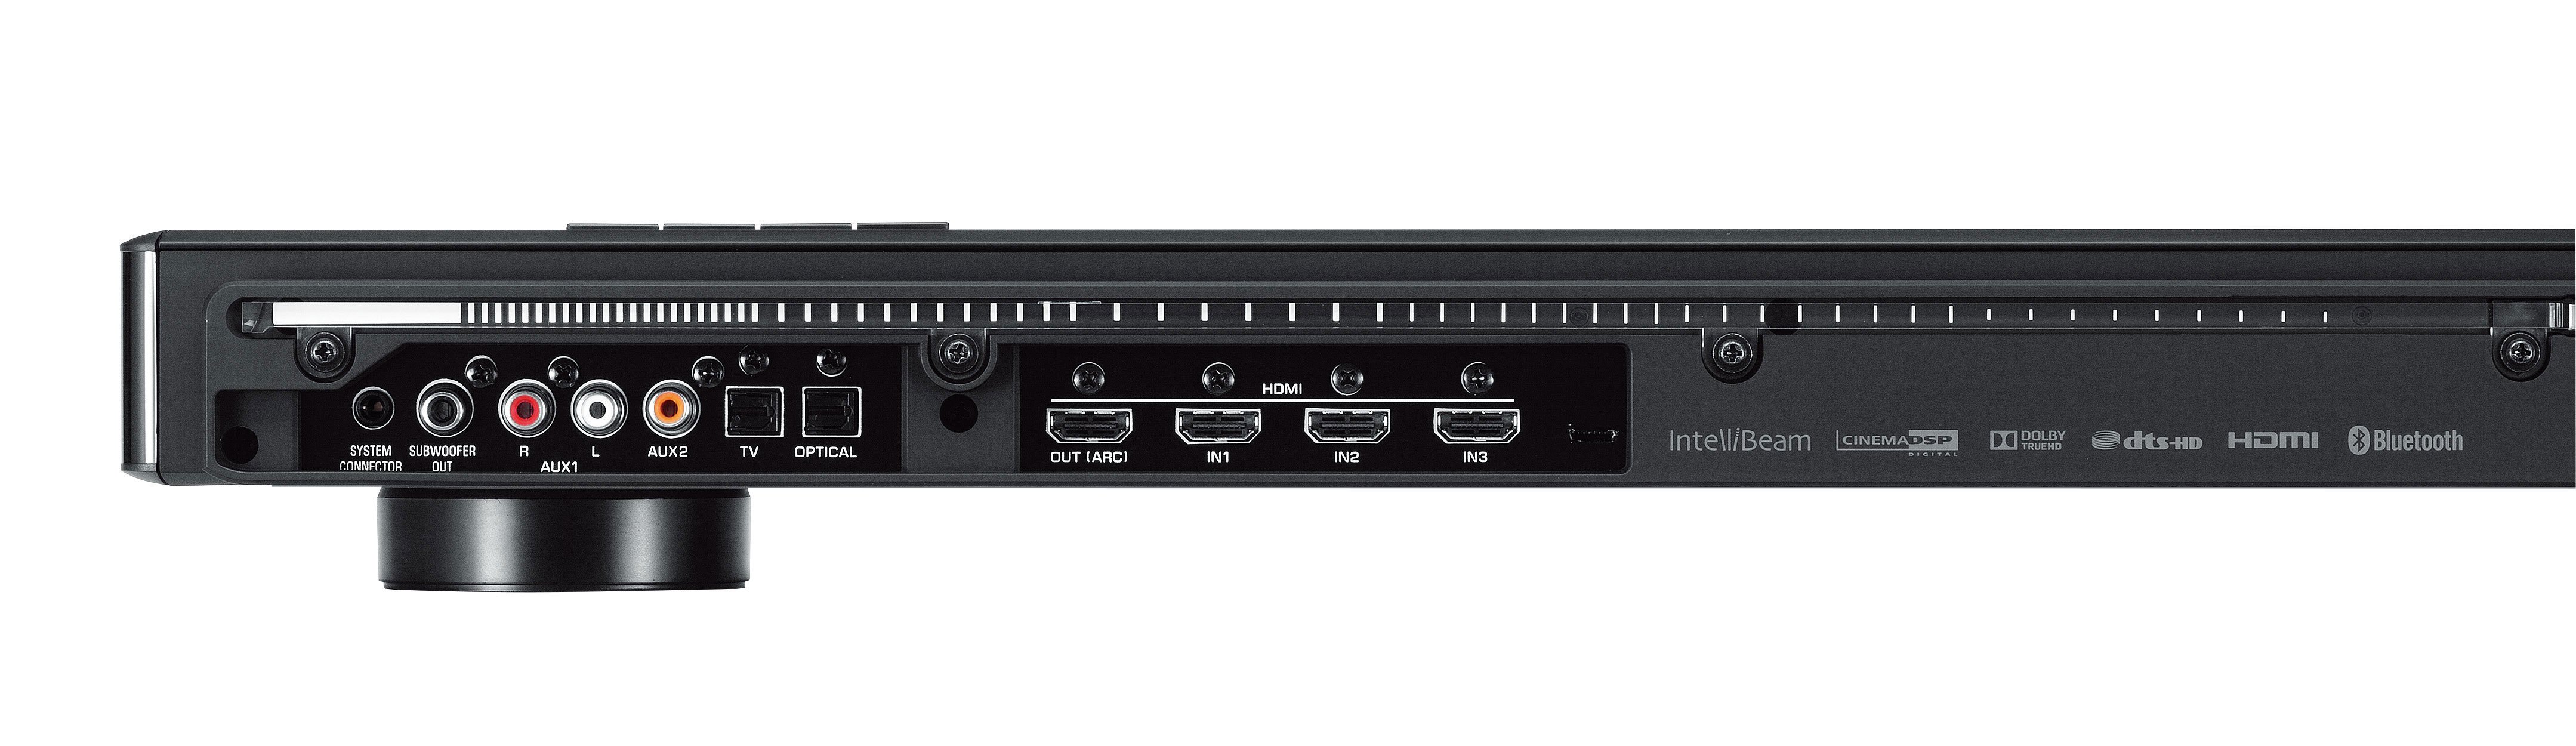 YSP-2500 - Specs - Sound Bars - Audio & Visual - Products - Yamaha 